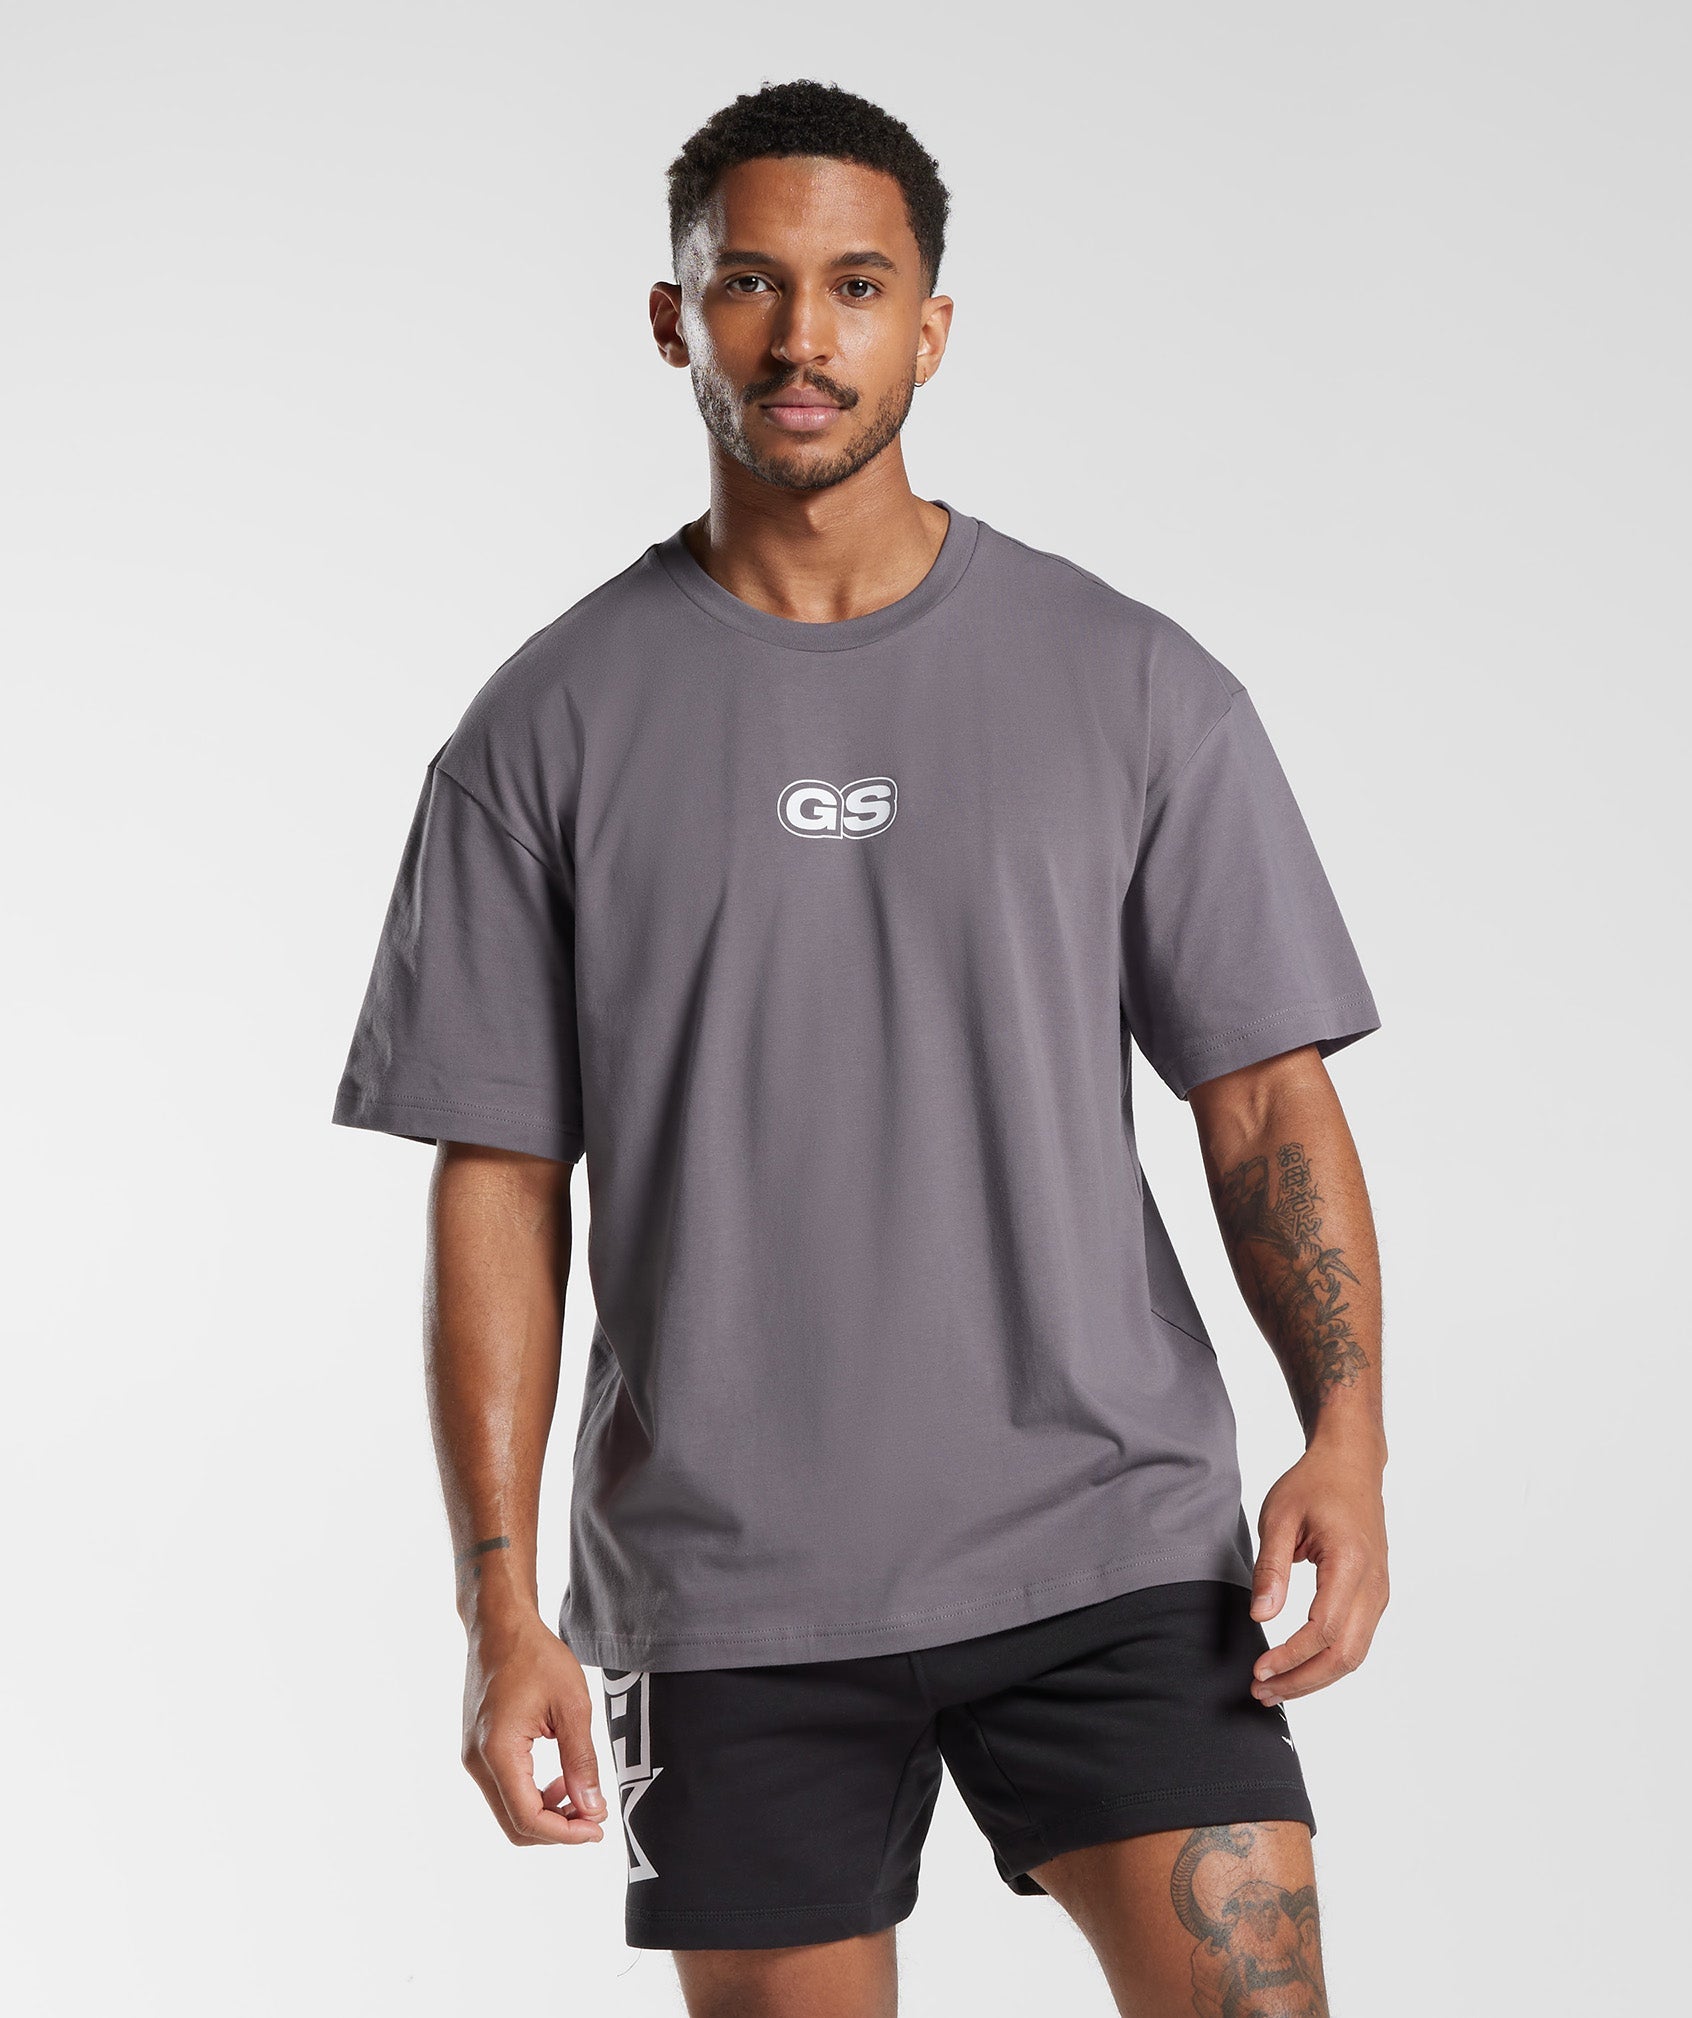 GMSHK Oversized T-Shirt in Titanium Grey - view 2